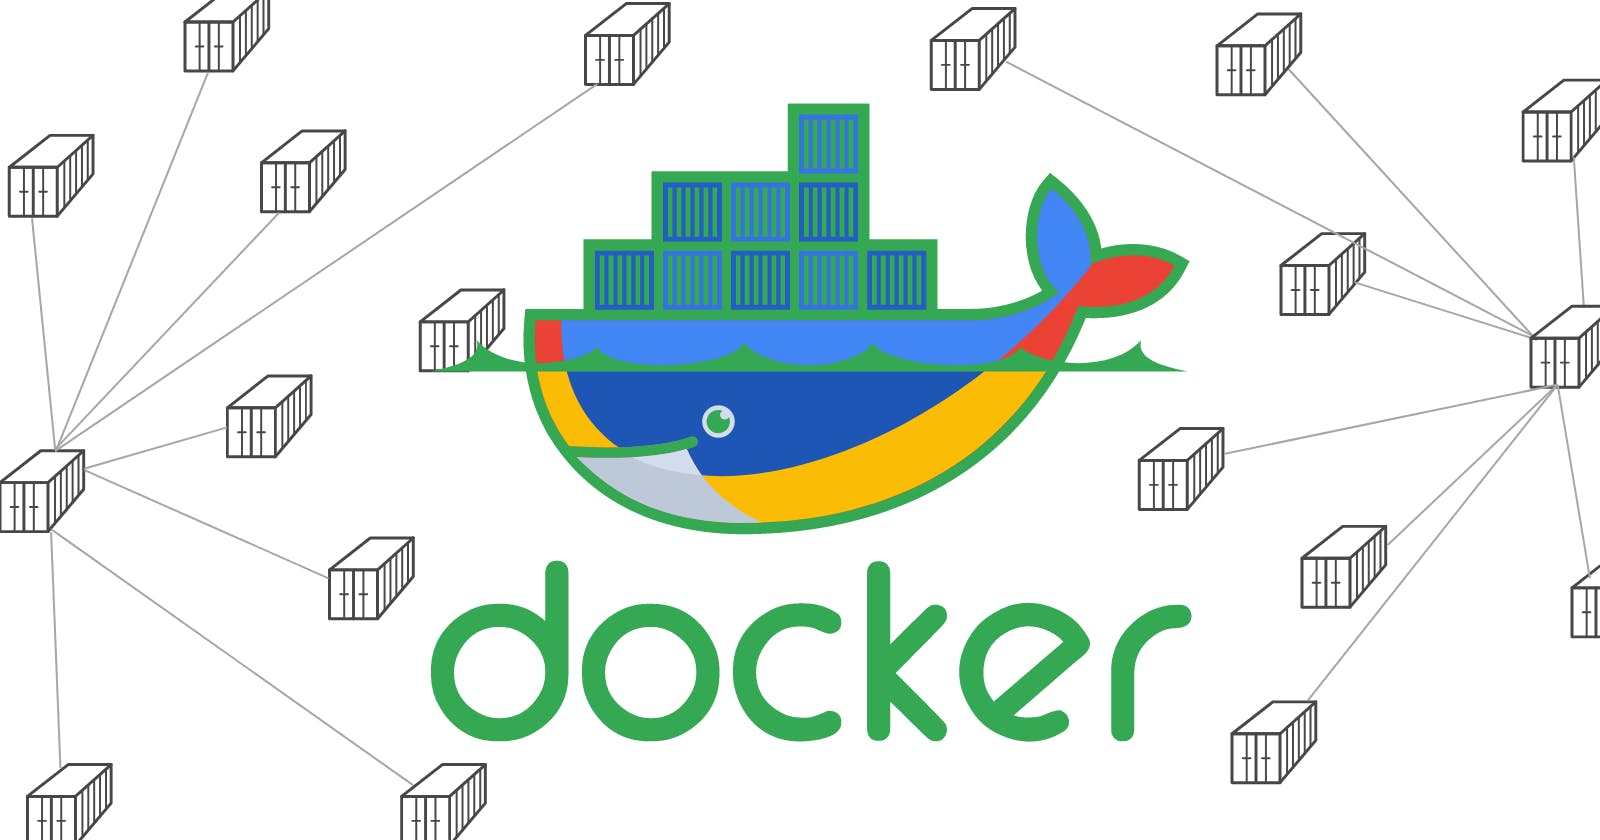 Docker Network